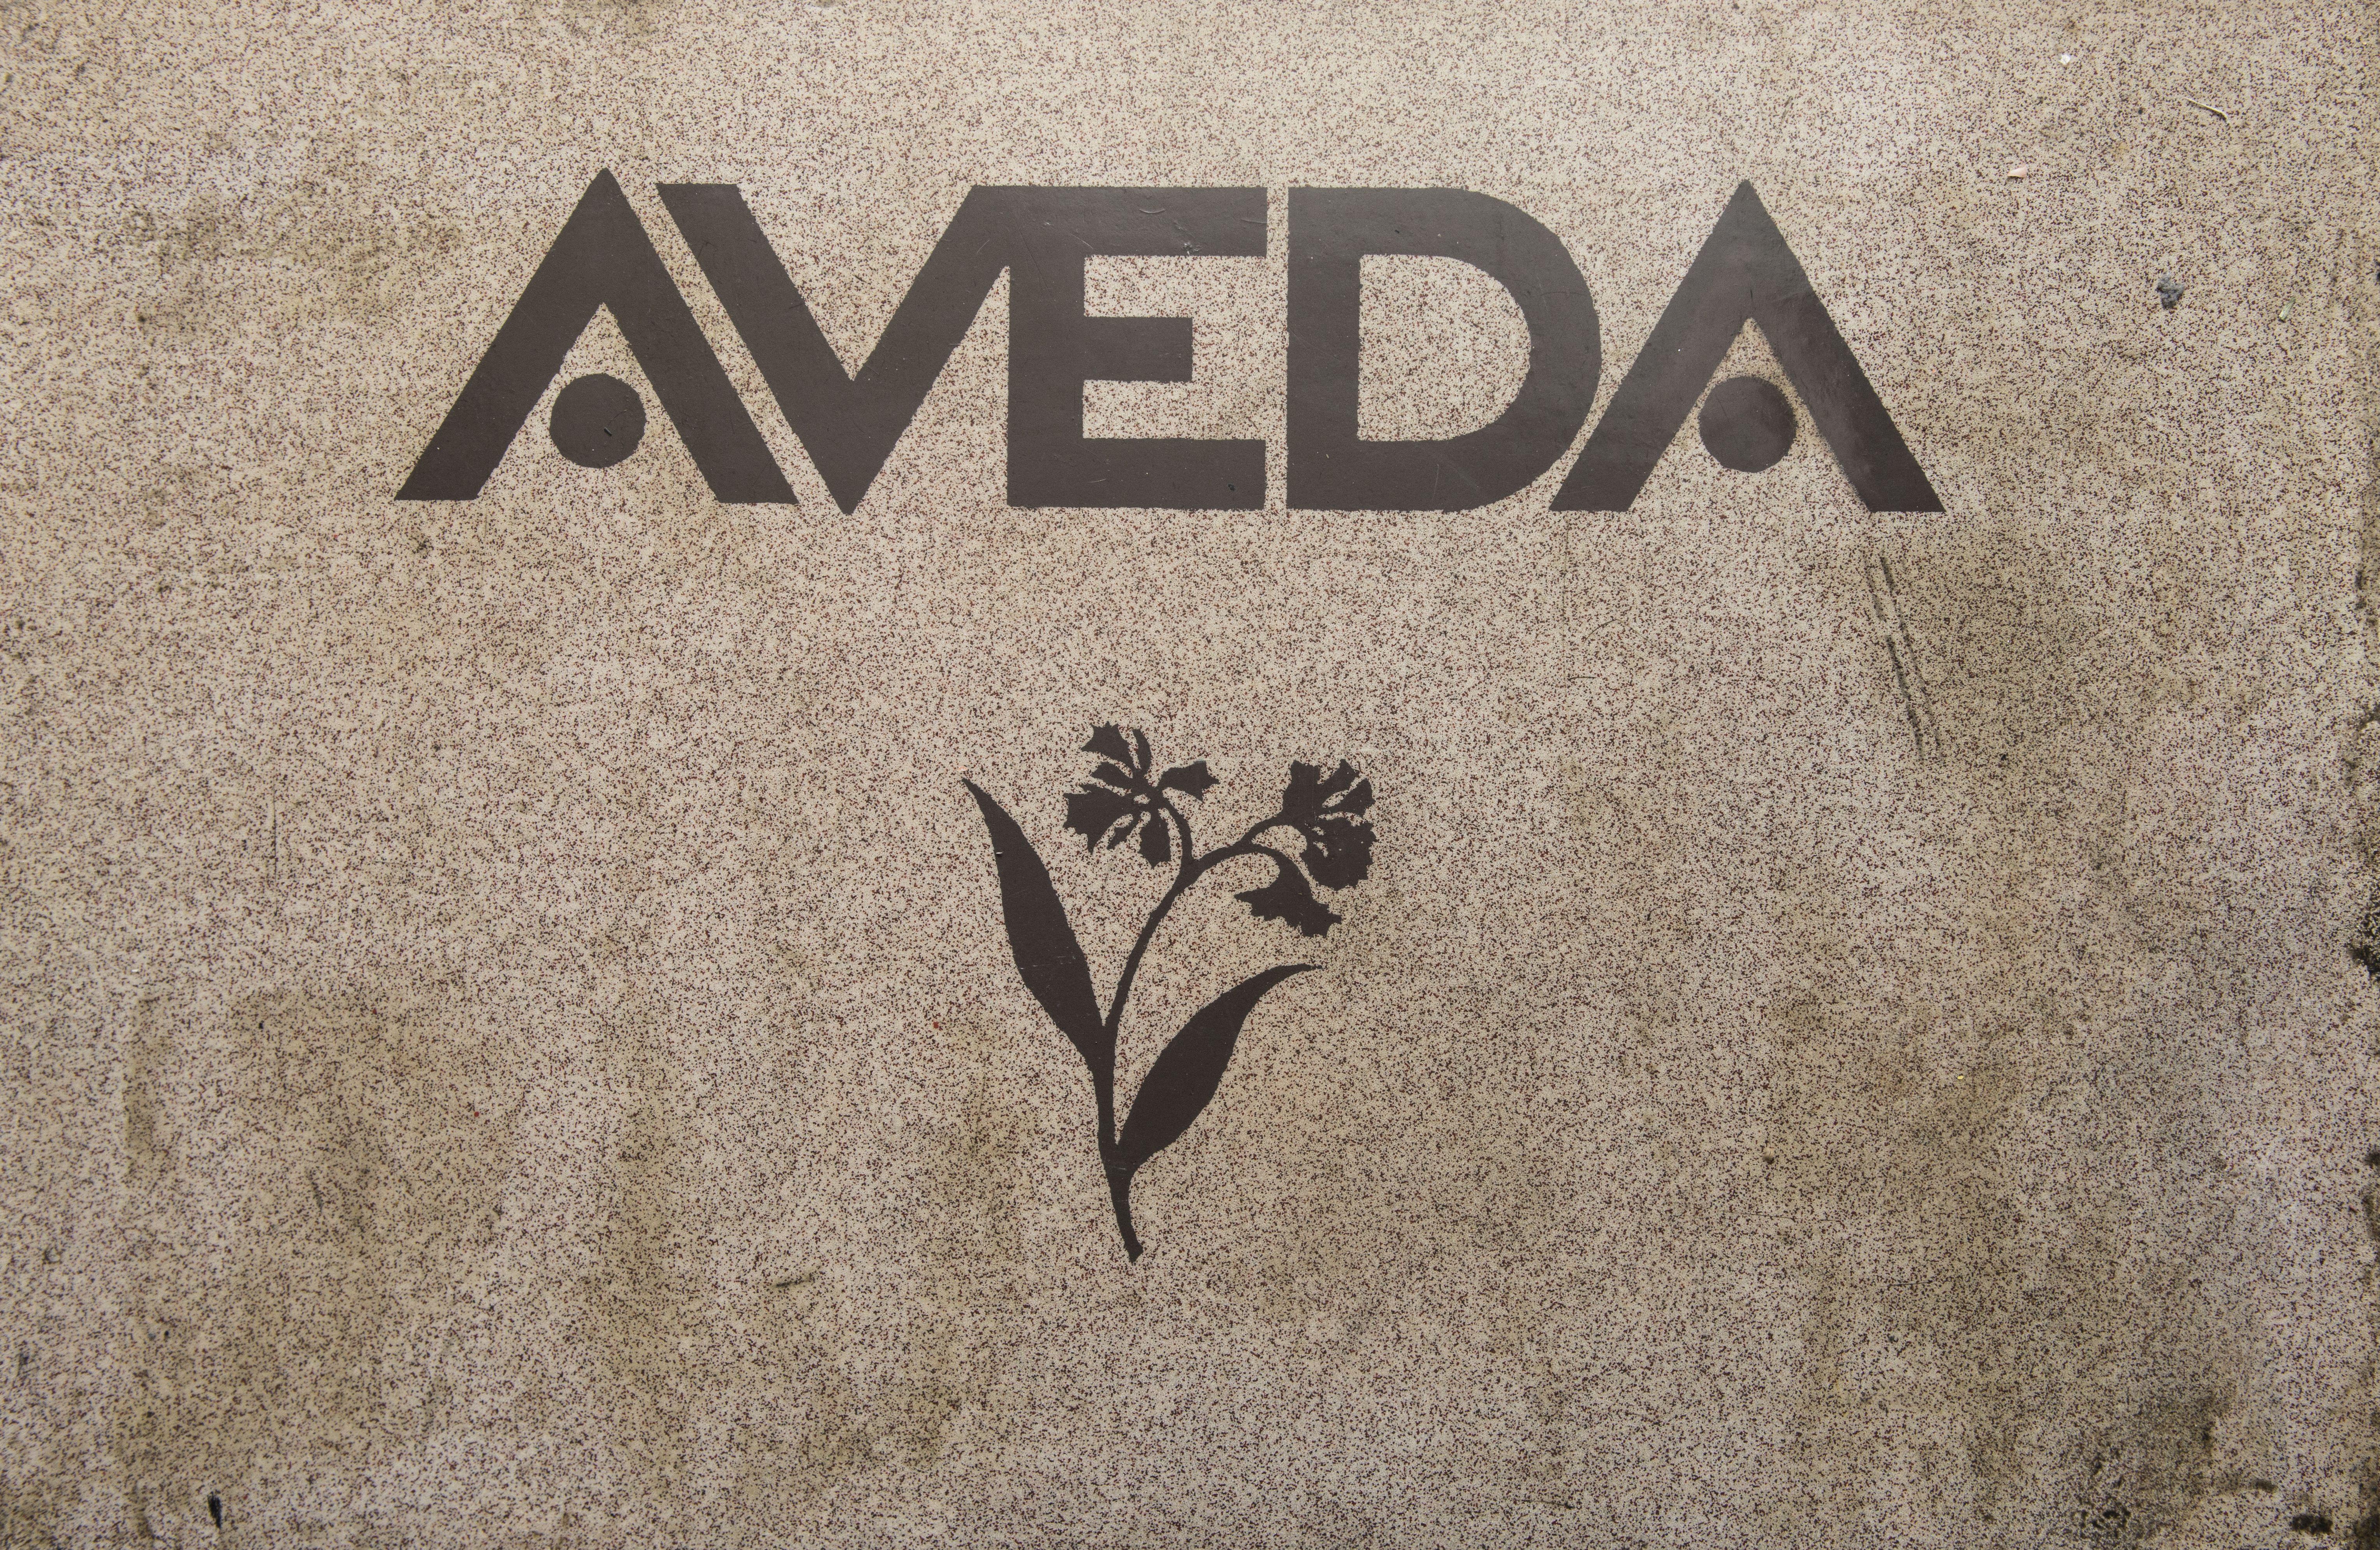 Aveda Logo - The Advantage of an Aveda Education Institute. Aveda